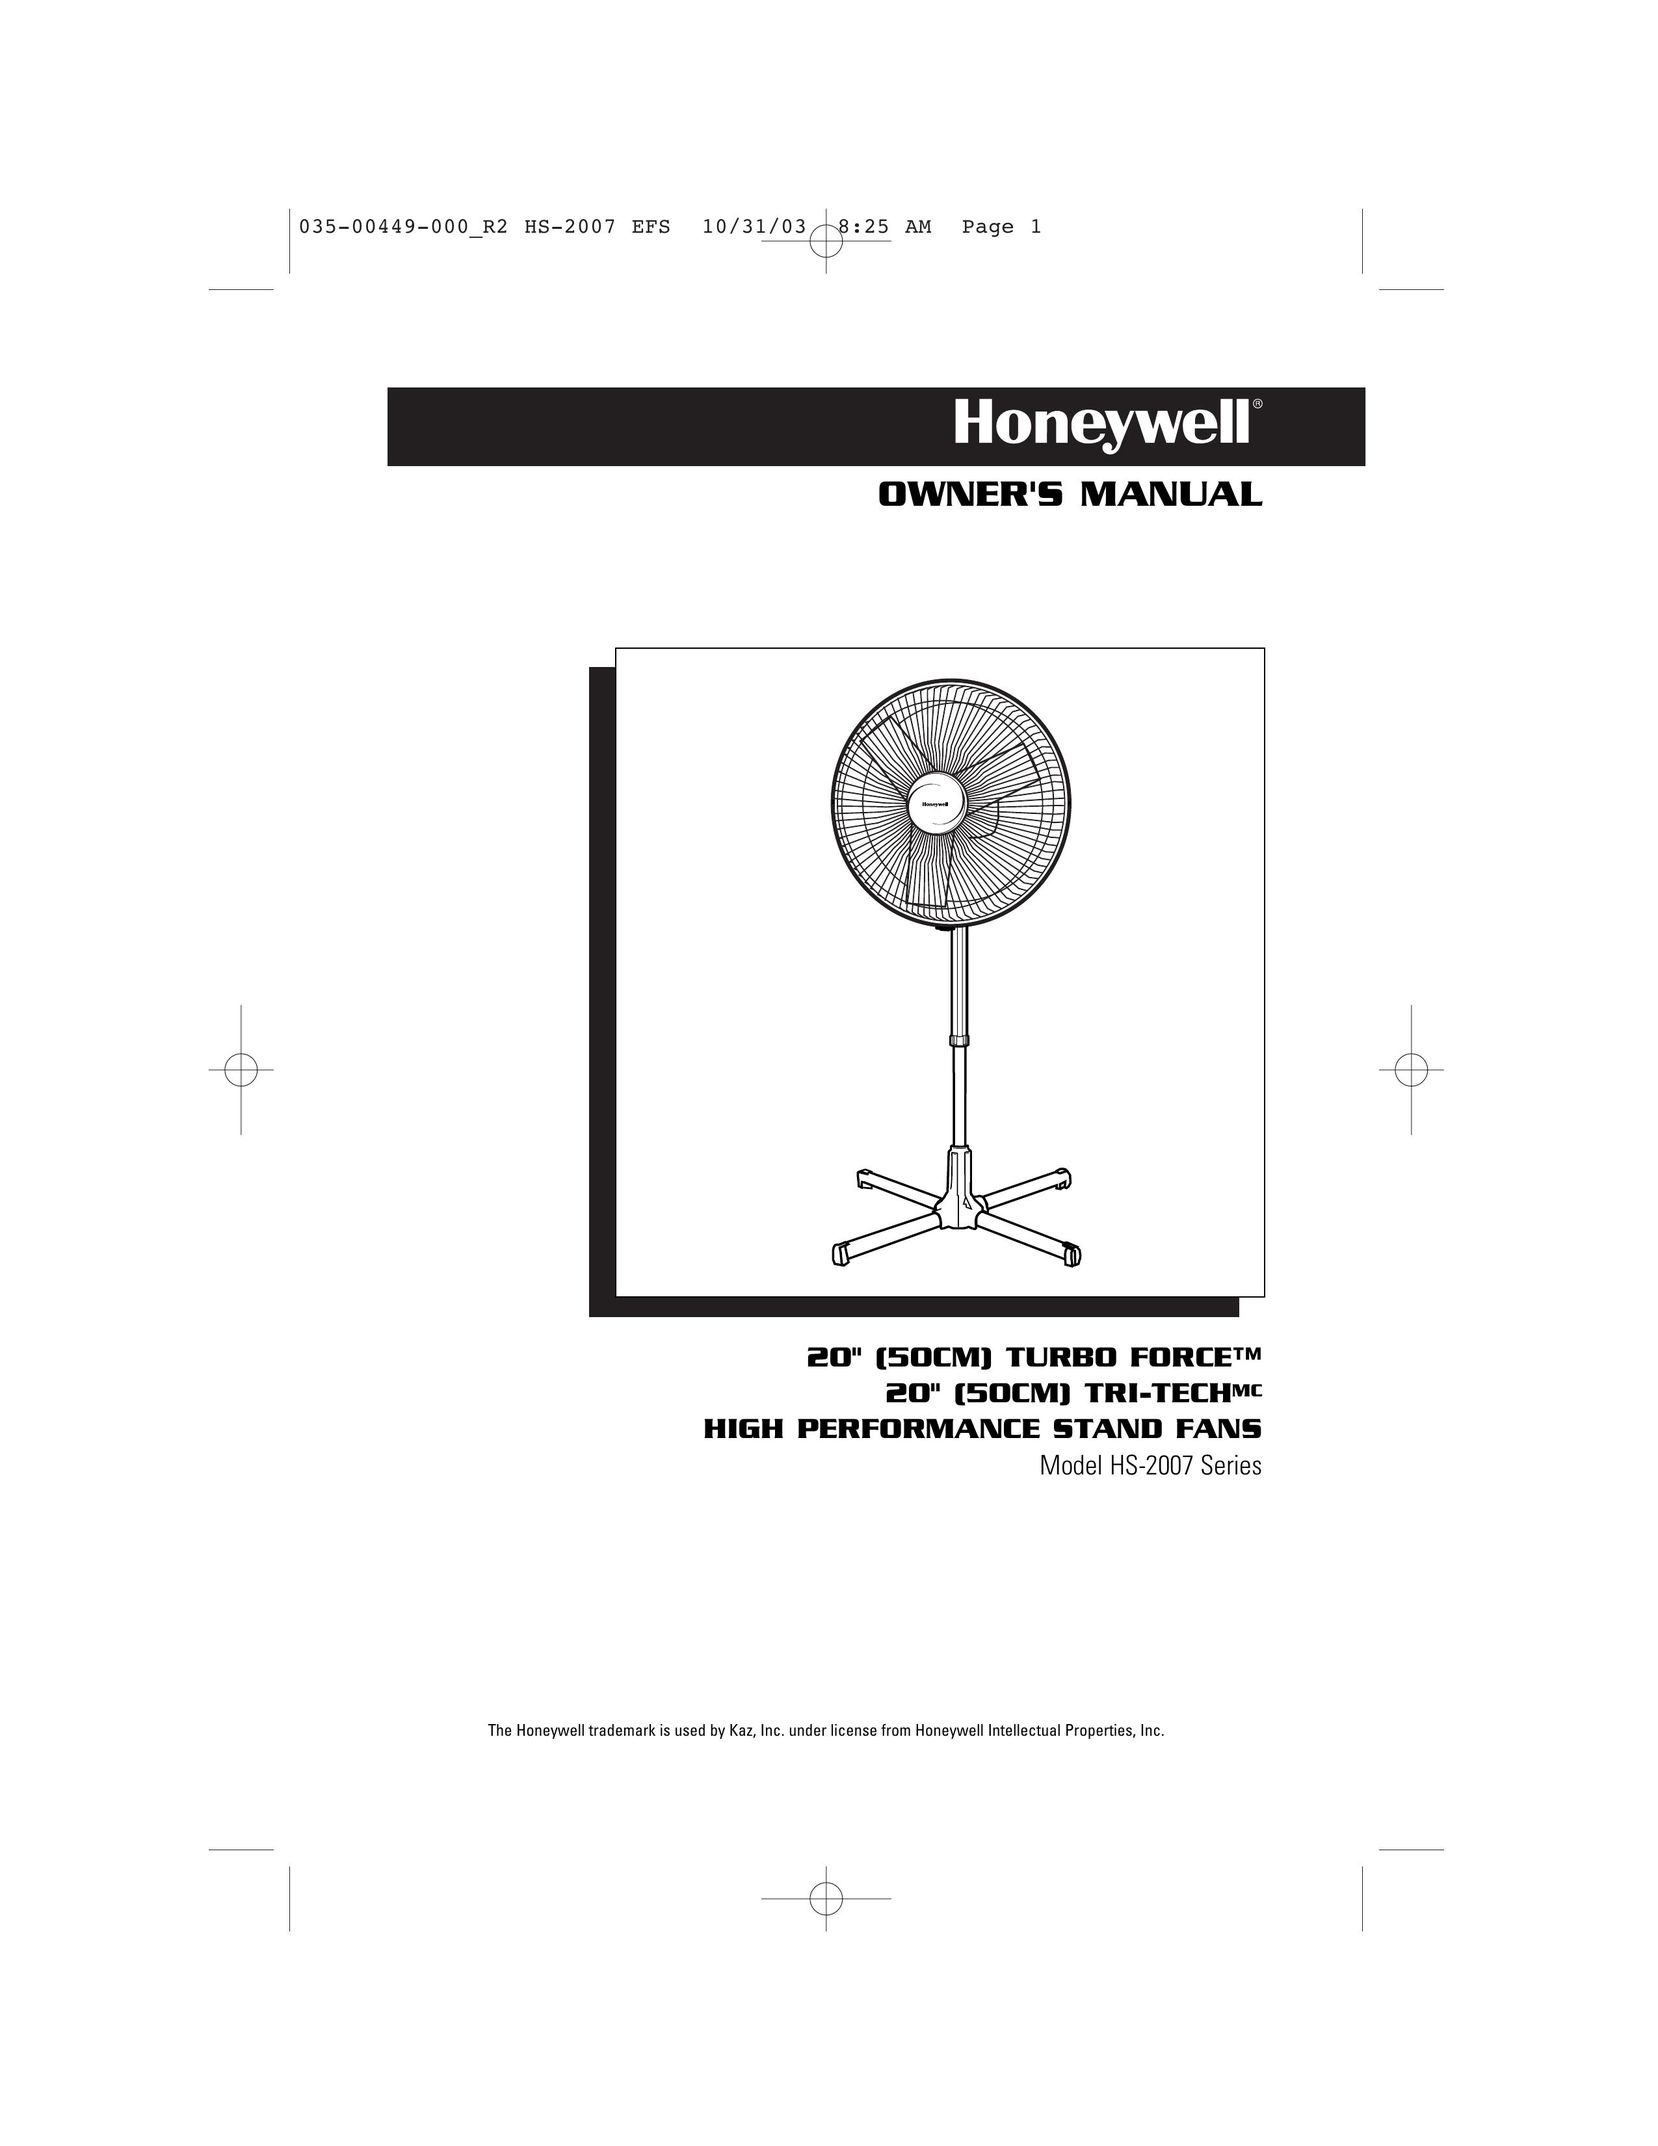 Honeywell HS-2007 Series Fan User Manual